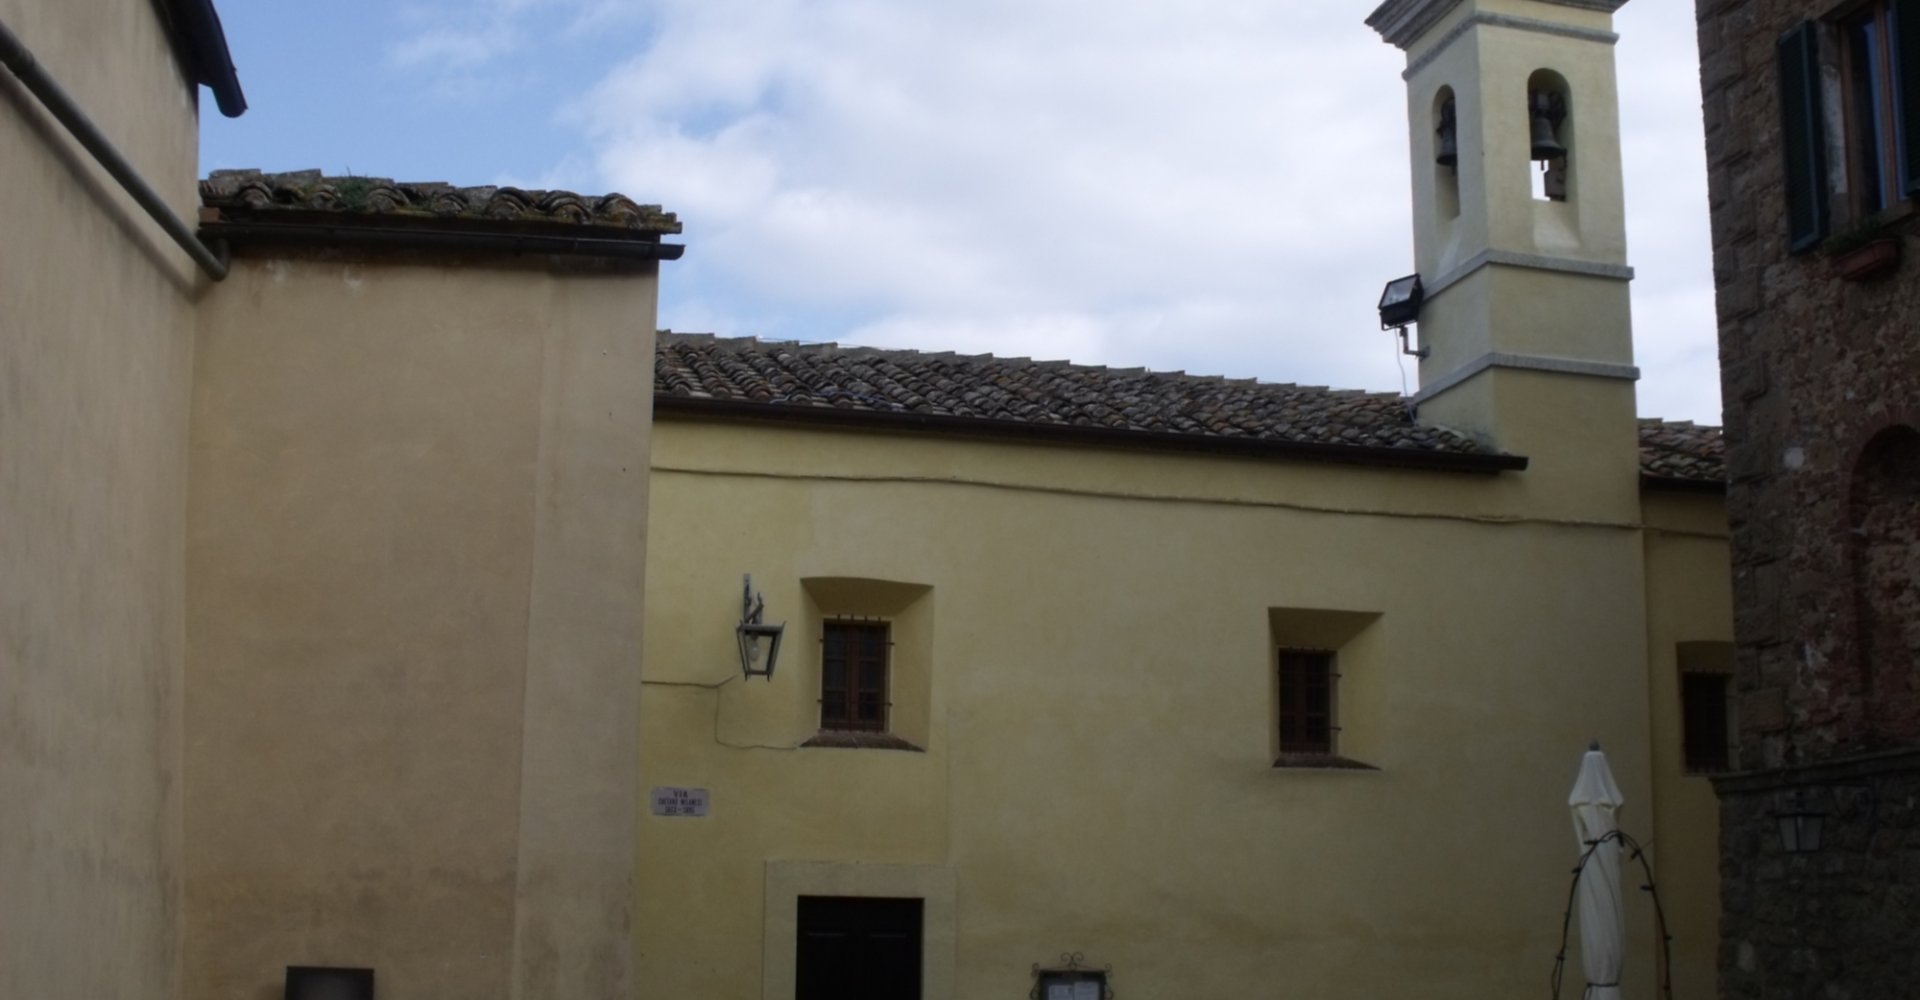 Castelmuzio, die Confraternità San Bernardino